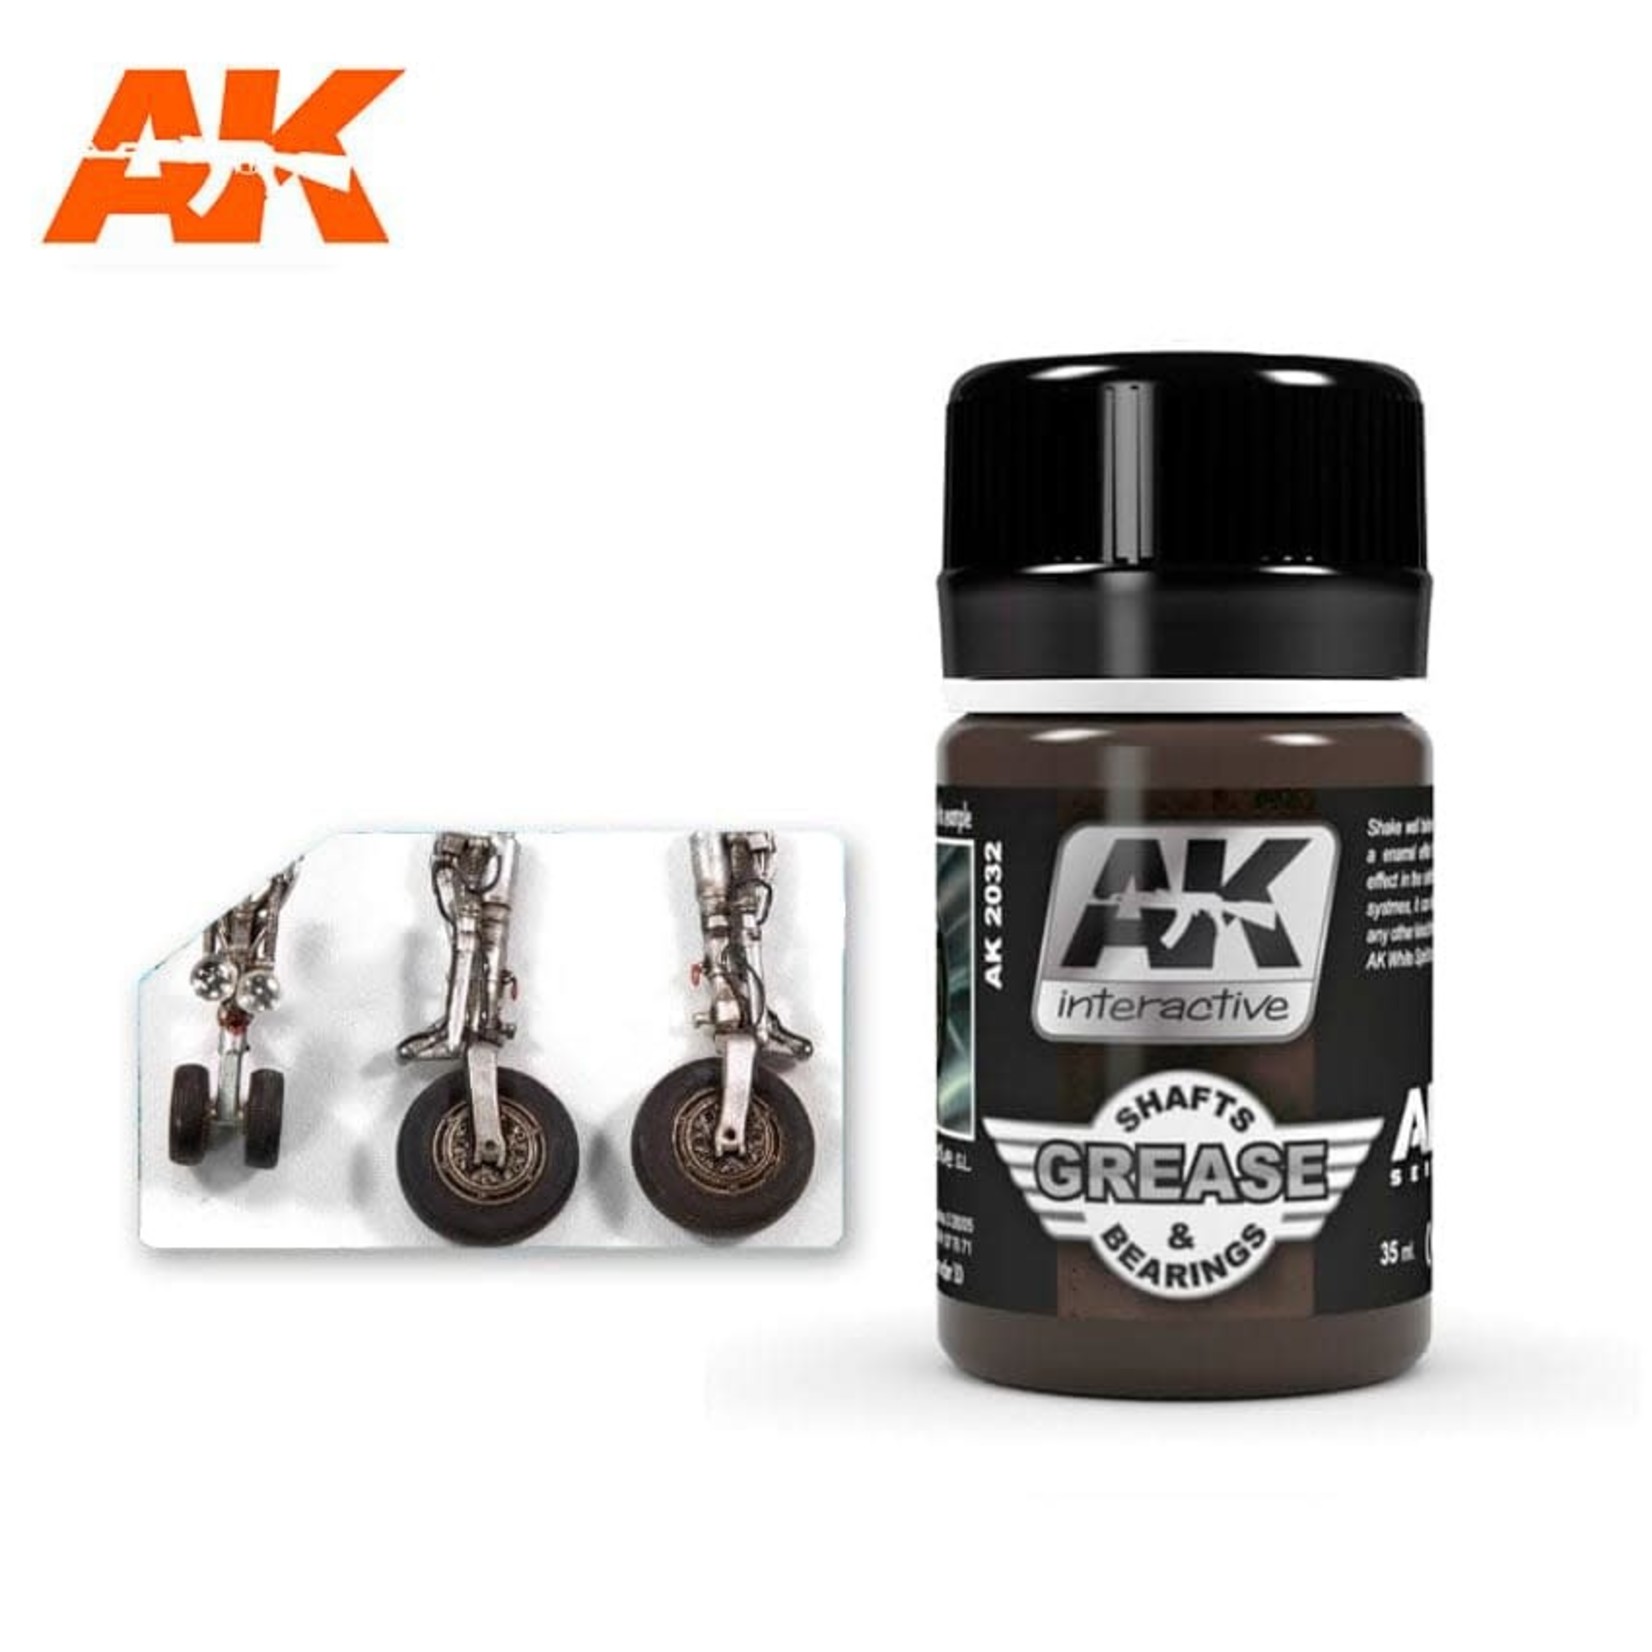 AK Interactive AK2032 Weathering Effects Grease Shafts & Bearings 35ml